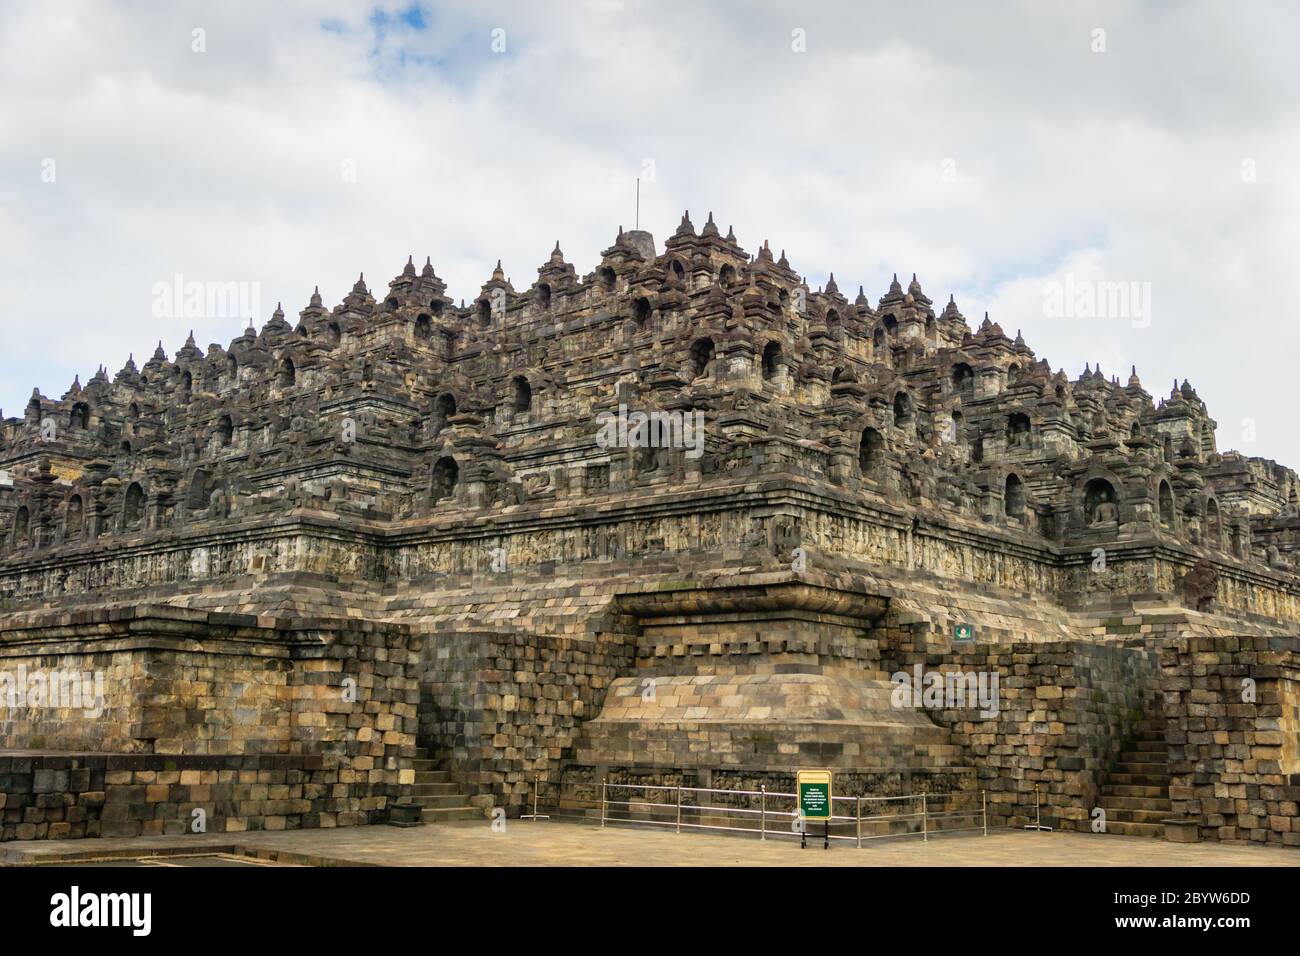 Borobudur Tempel in Yogyakarta, Java, Indonesien - UNESCO-Weltkulturerbe beliebt bei Touristen Stockfoto